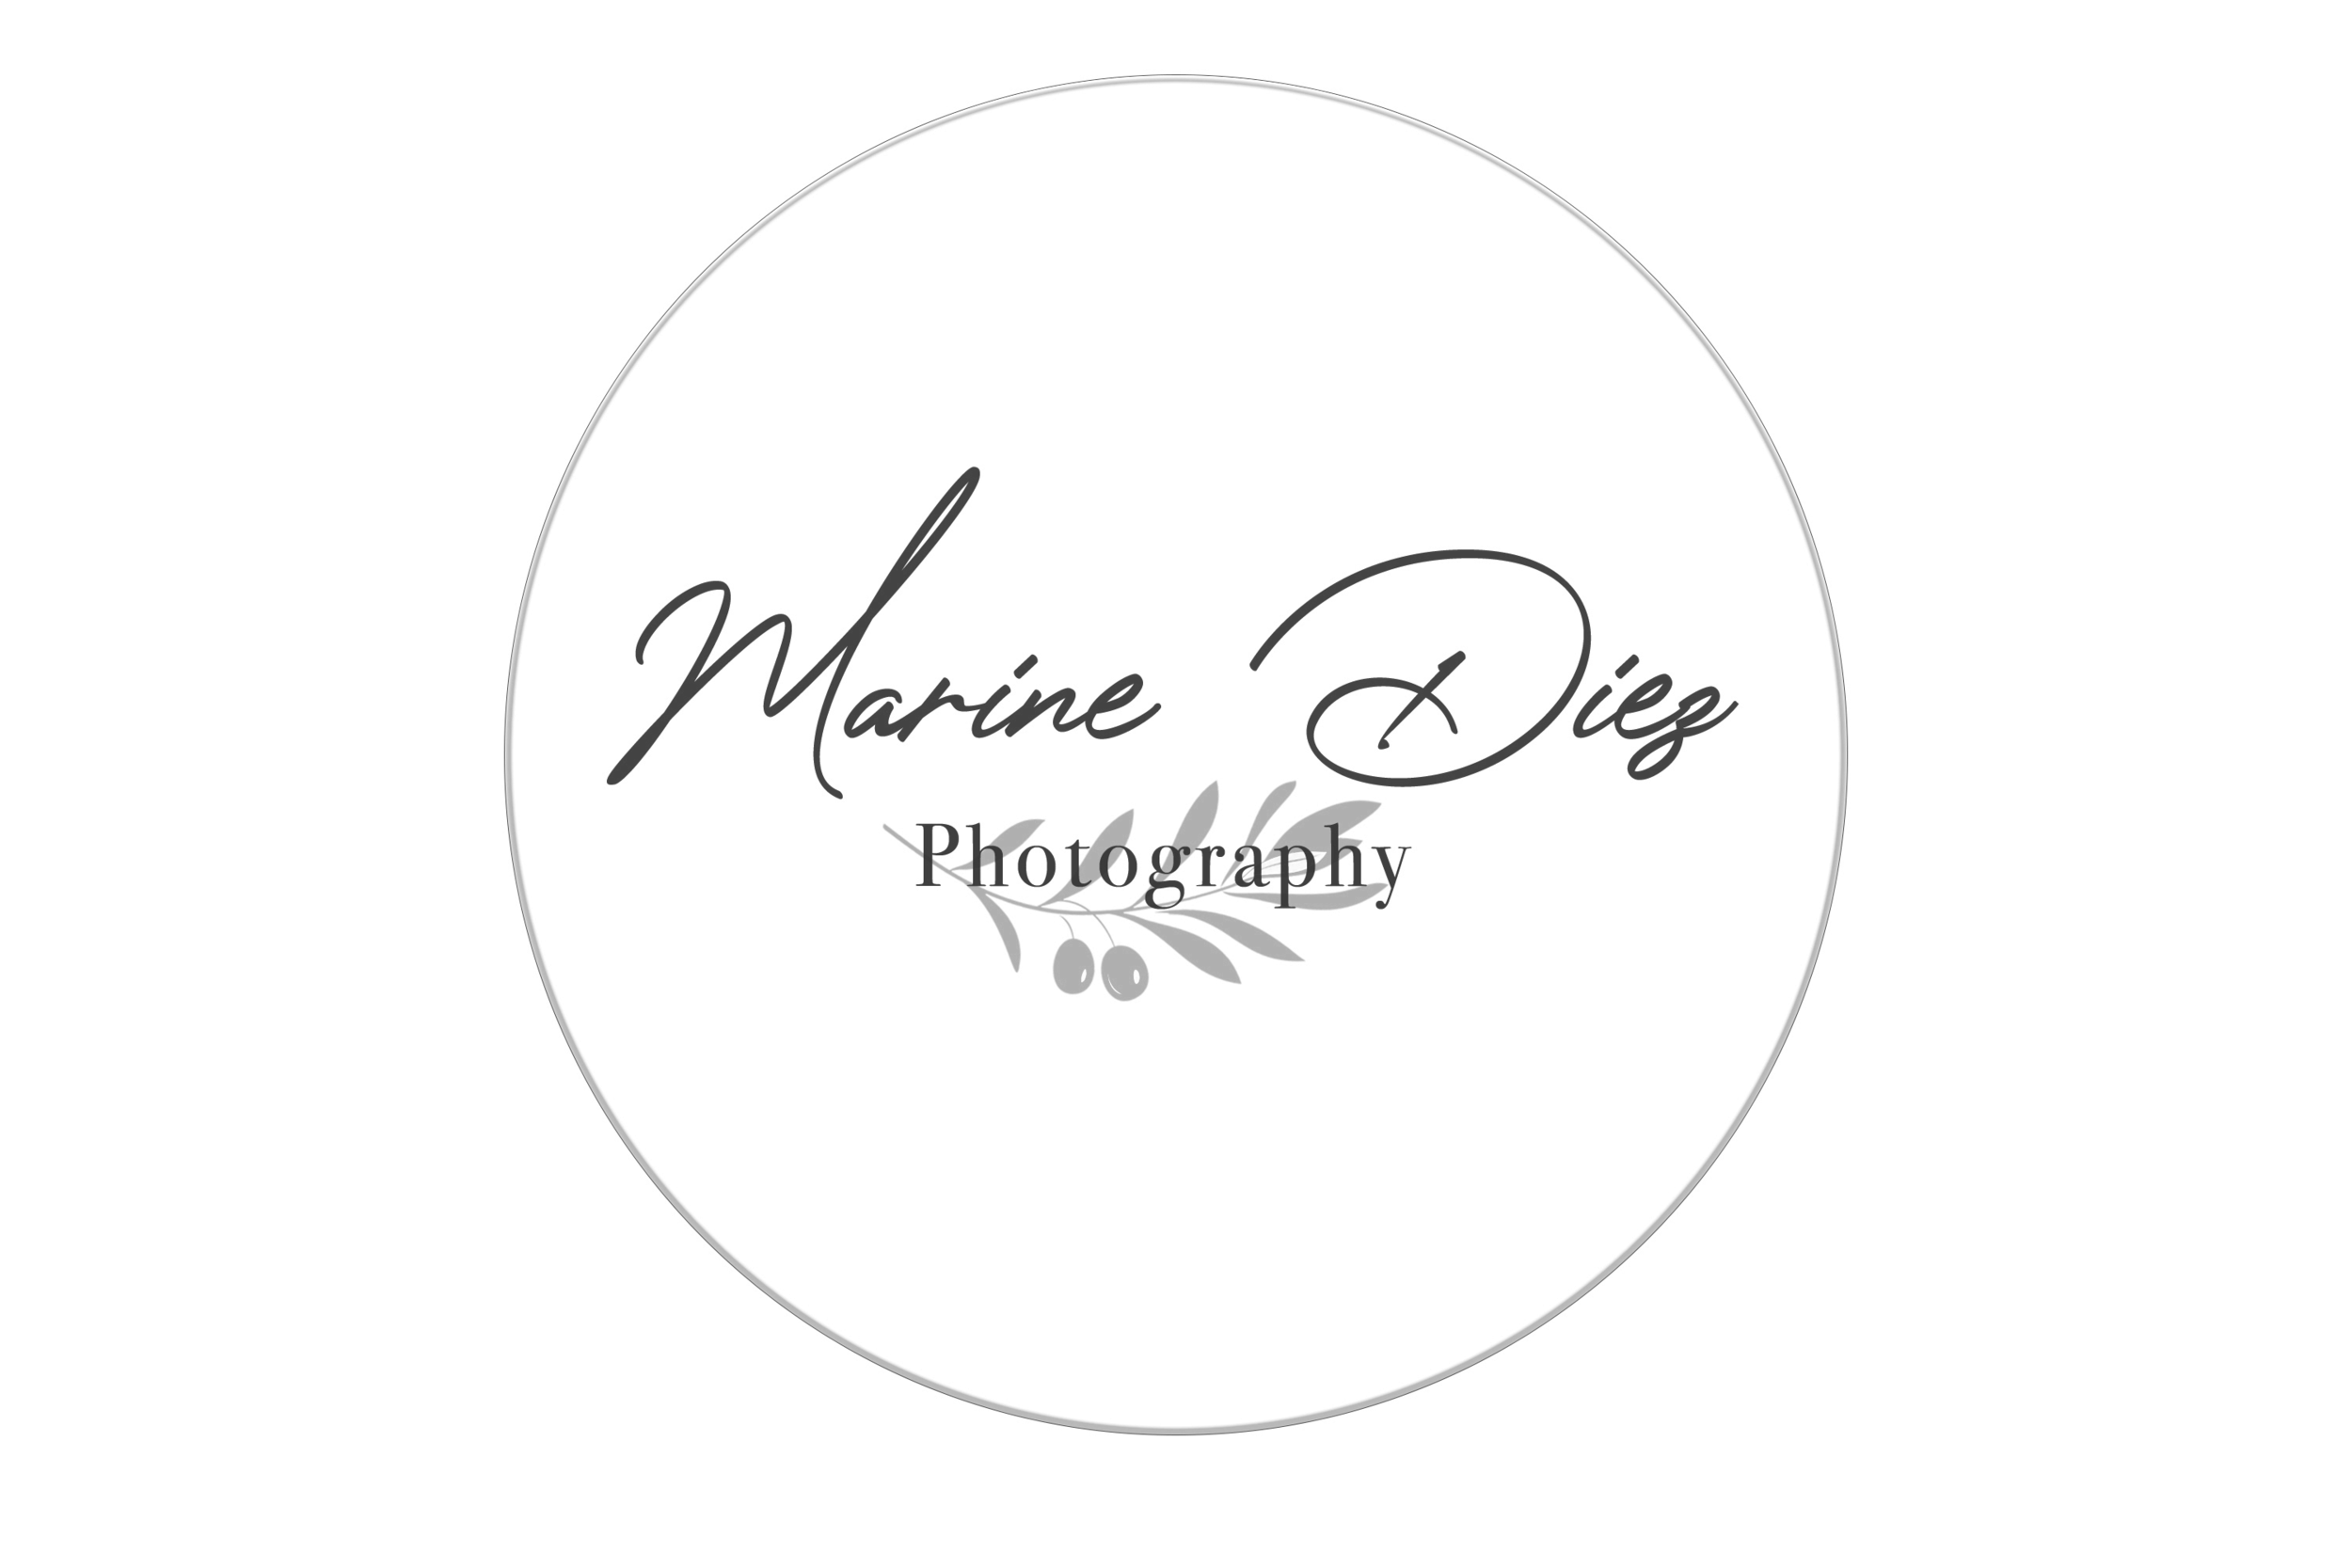 Marine Diez Photography - logo.png